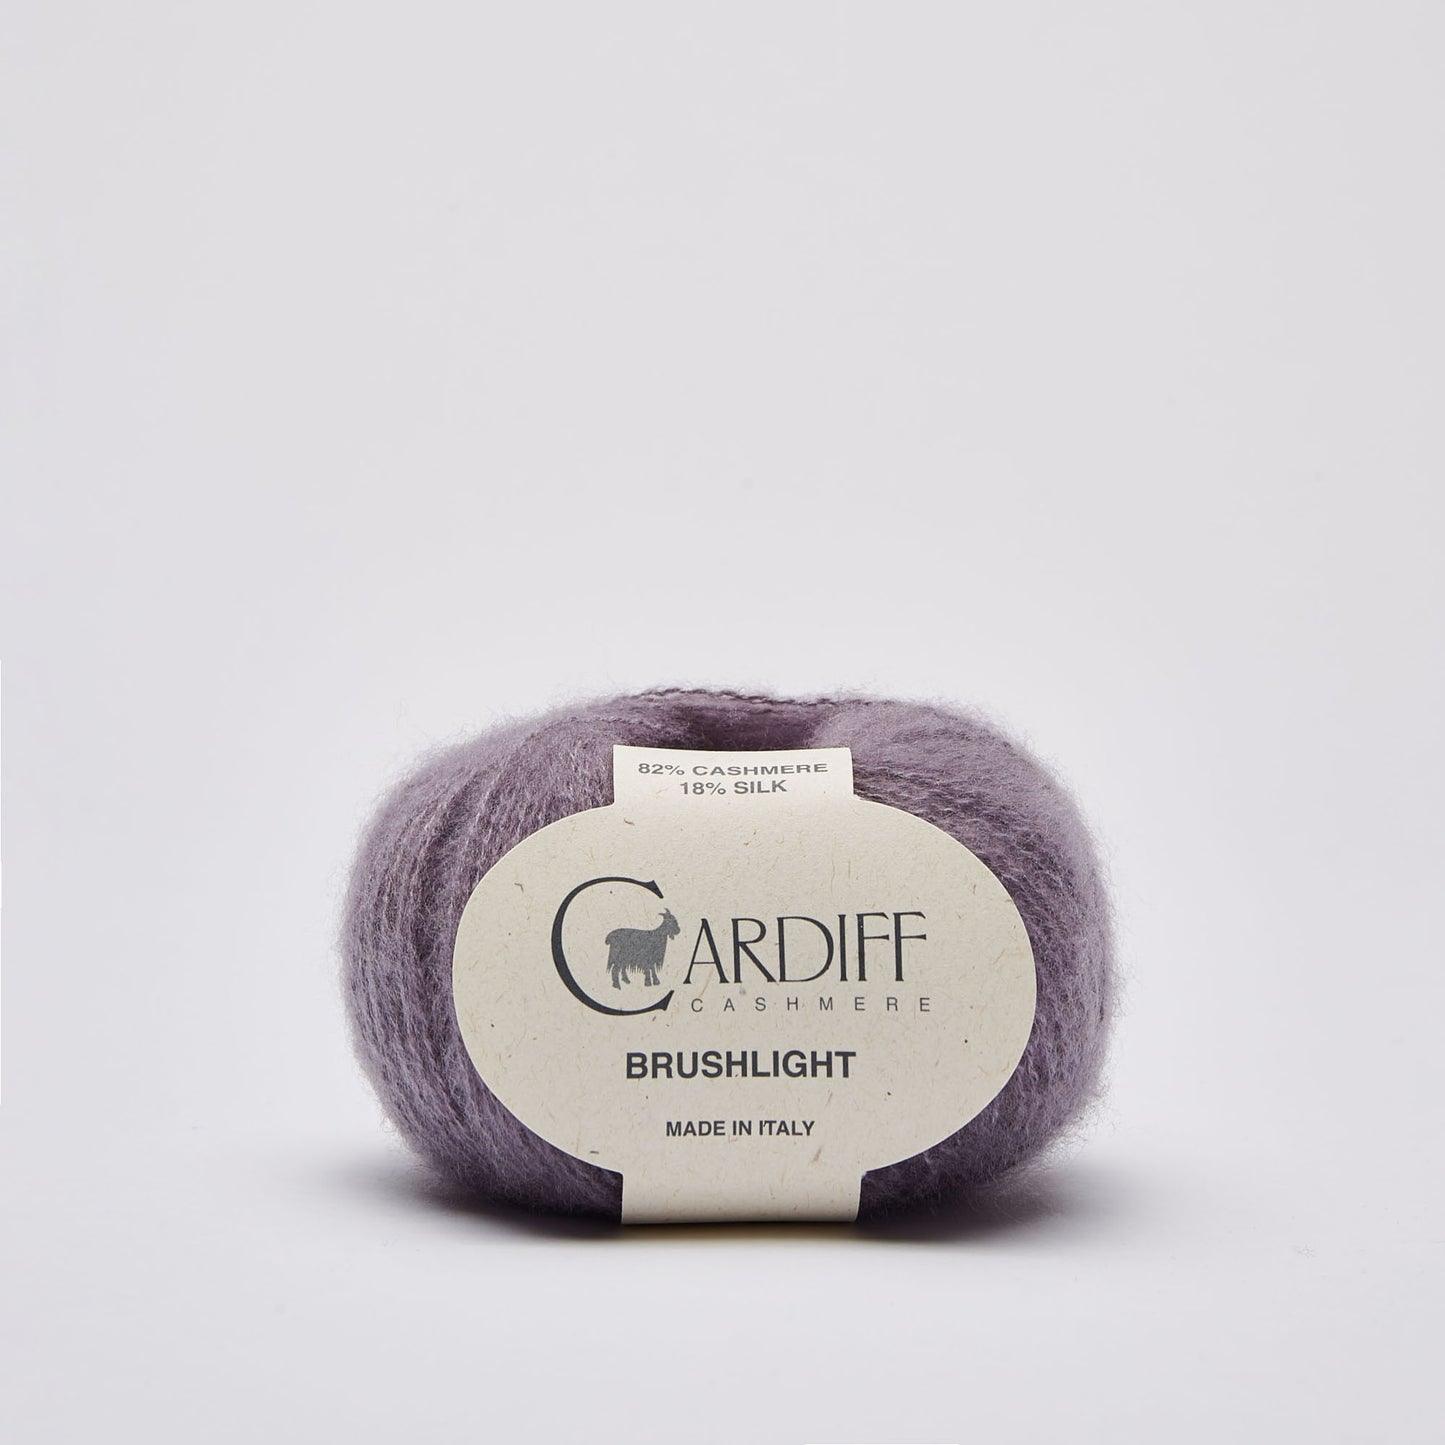 Cardiff BRUSHLIGHT gentle yarn, 107, GOSPEL, comp: 82% Cashmere, 18% Silk